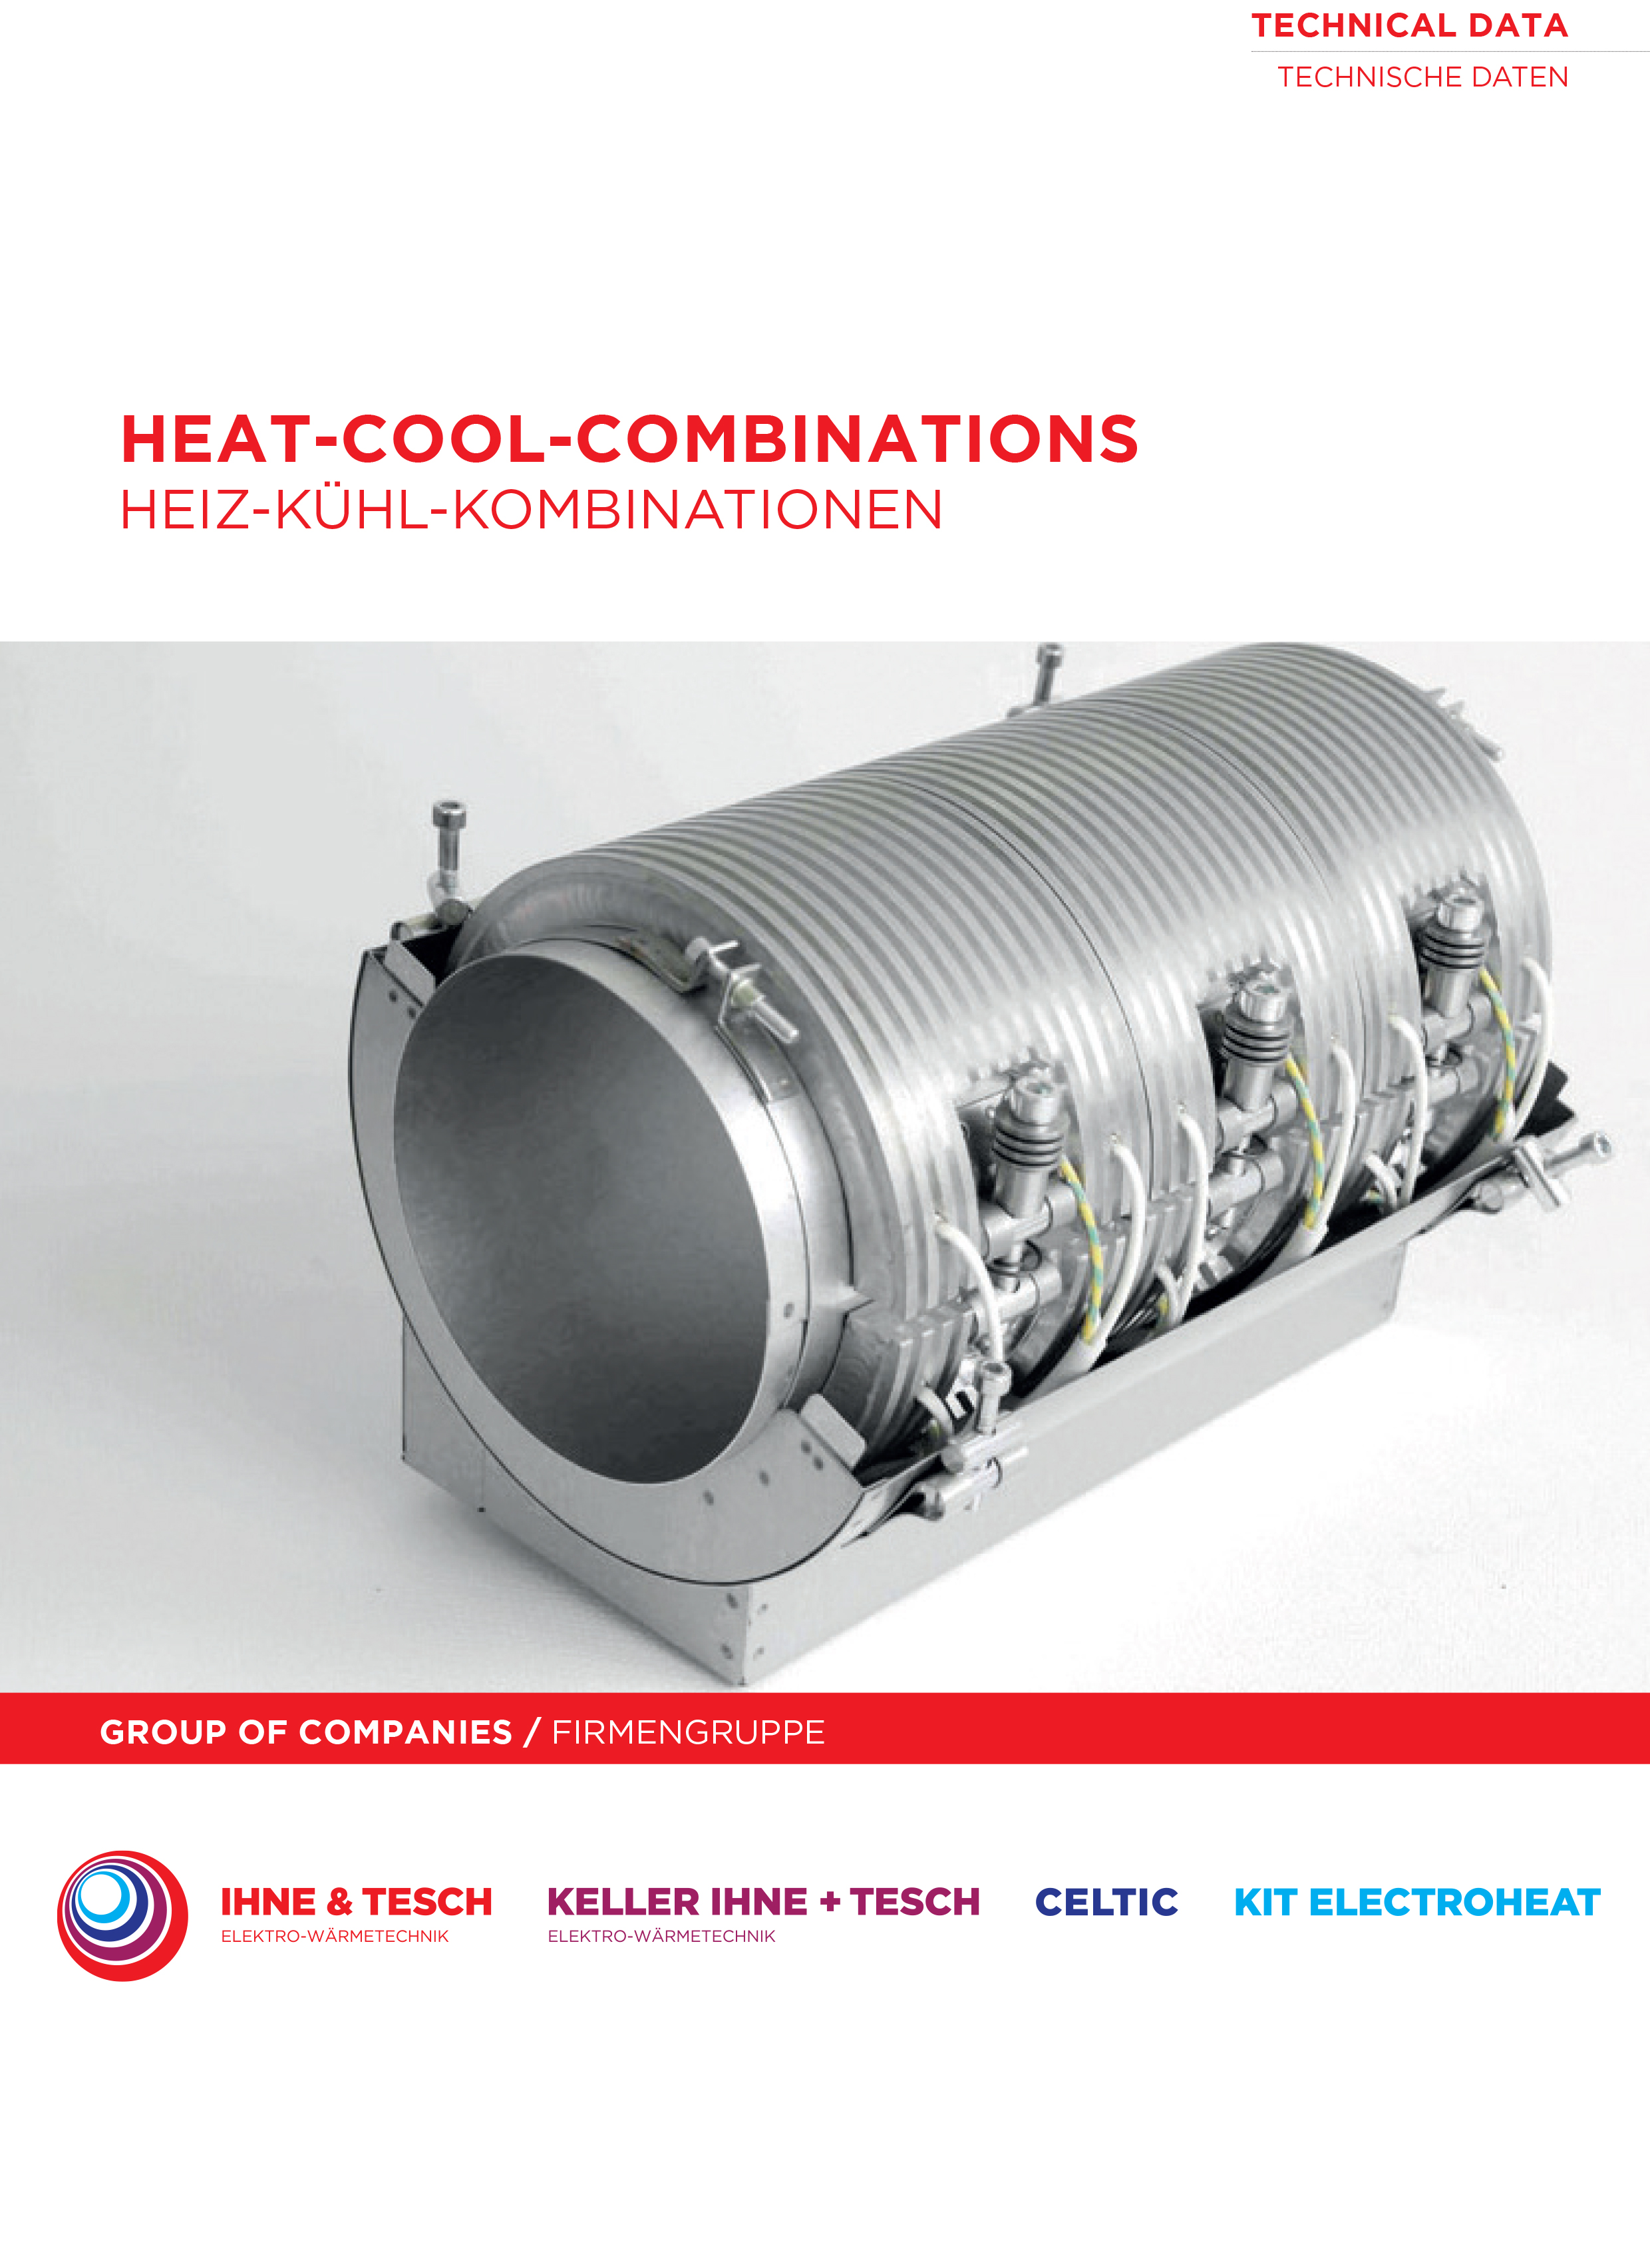 Heat-Cool-Combinations-Technical-data